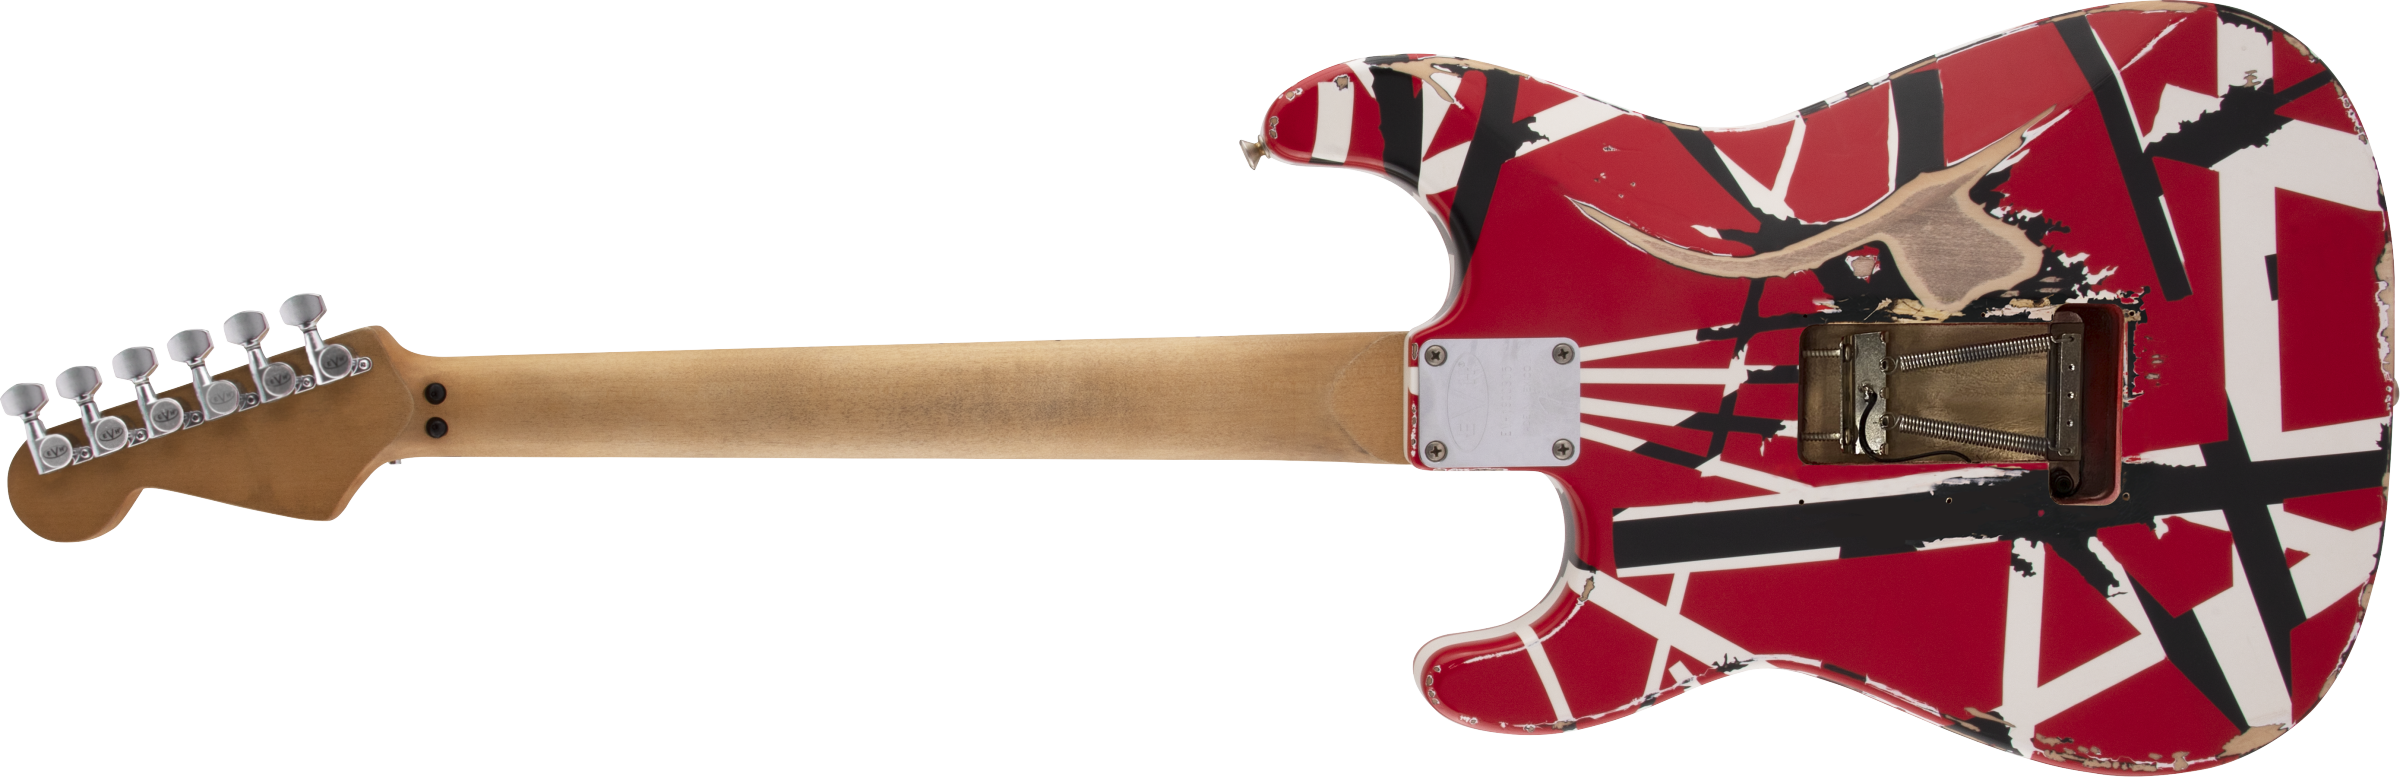 Evh Eddie Van Halen Frankenstein Frankie Striped Series Mex H Fr Mn - Red With Black & White Stripes - Str shape electric guitar - Variation 1